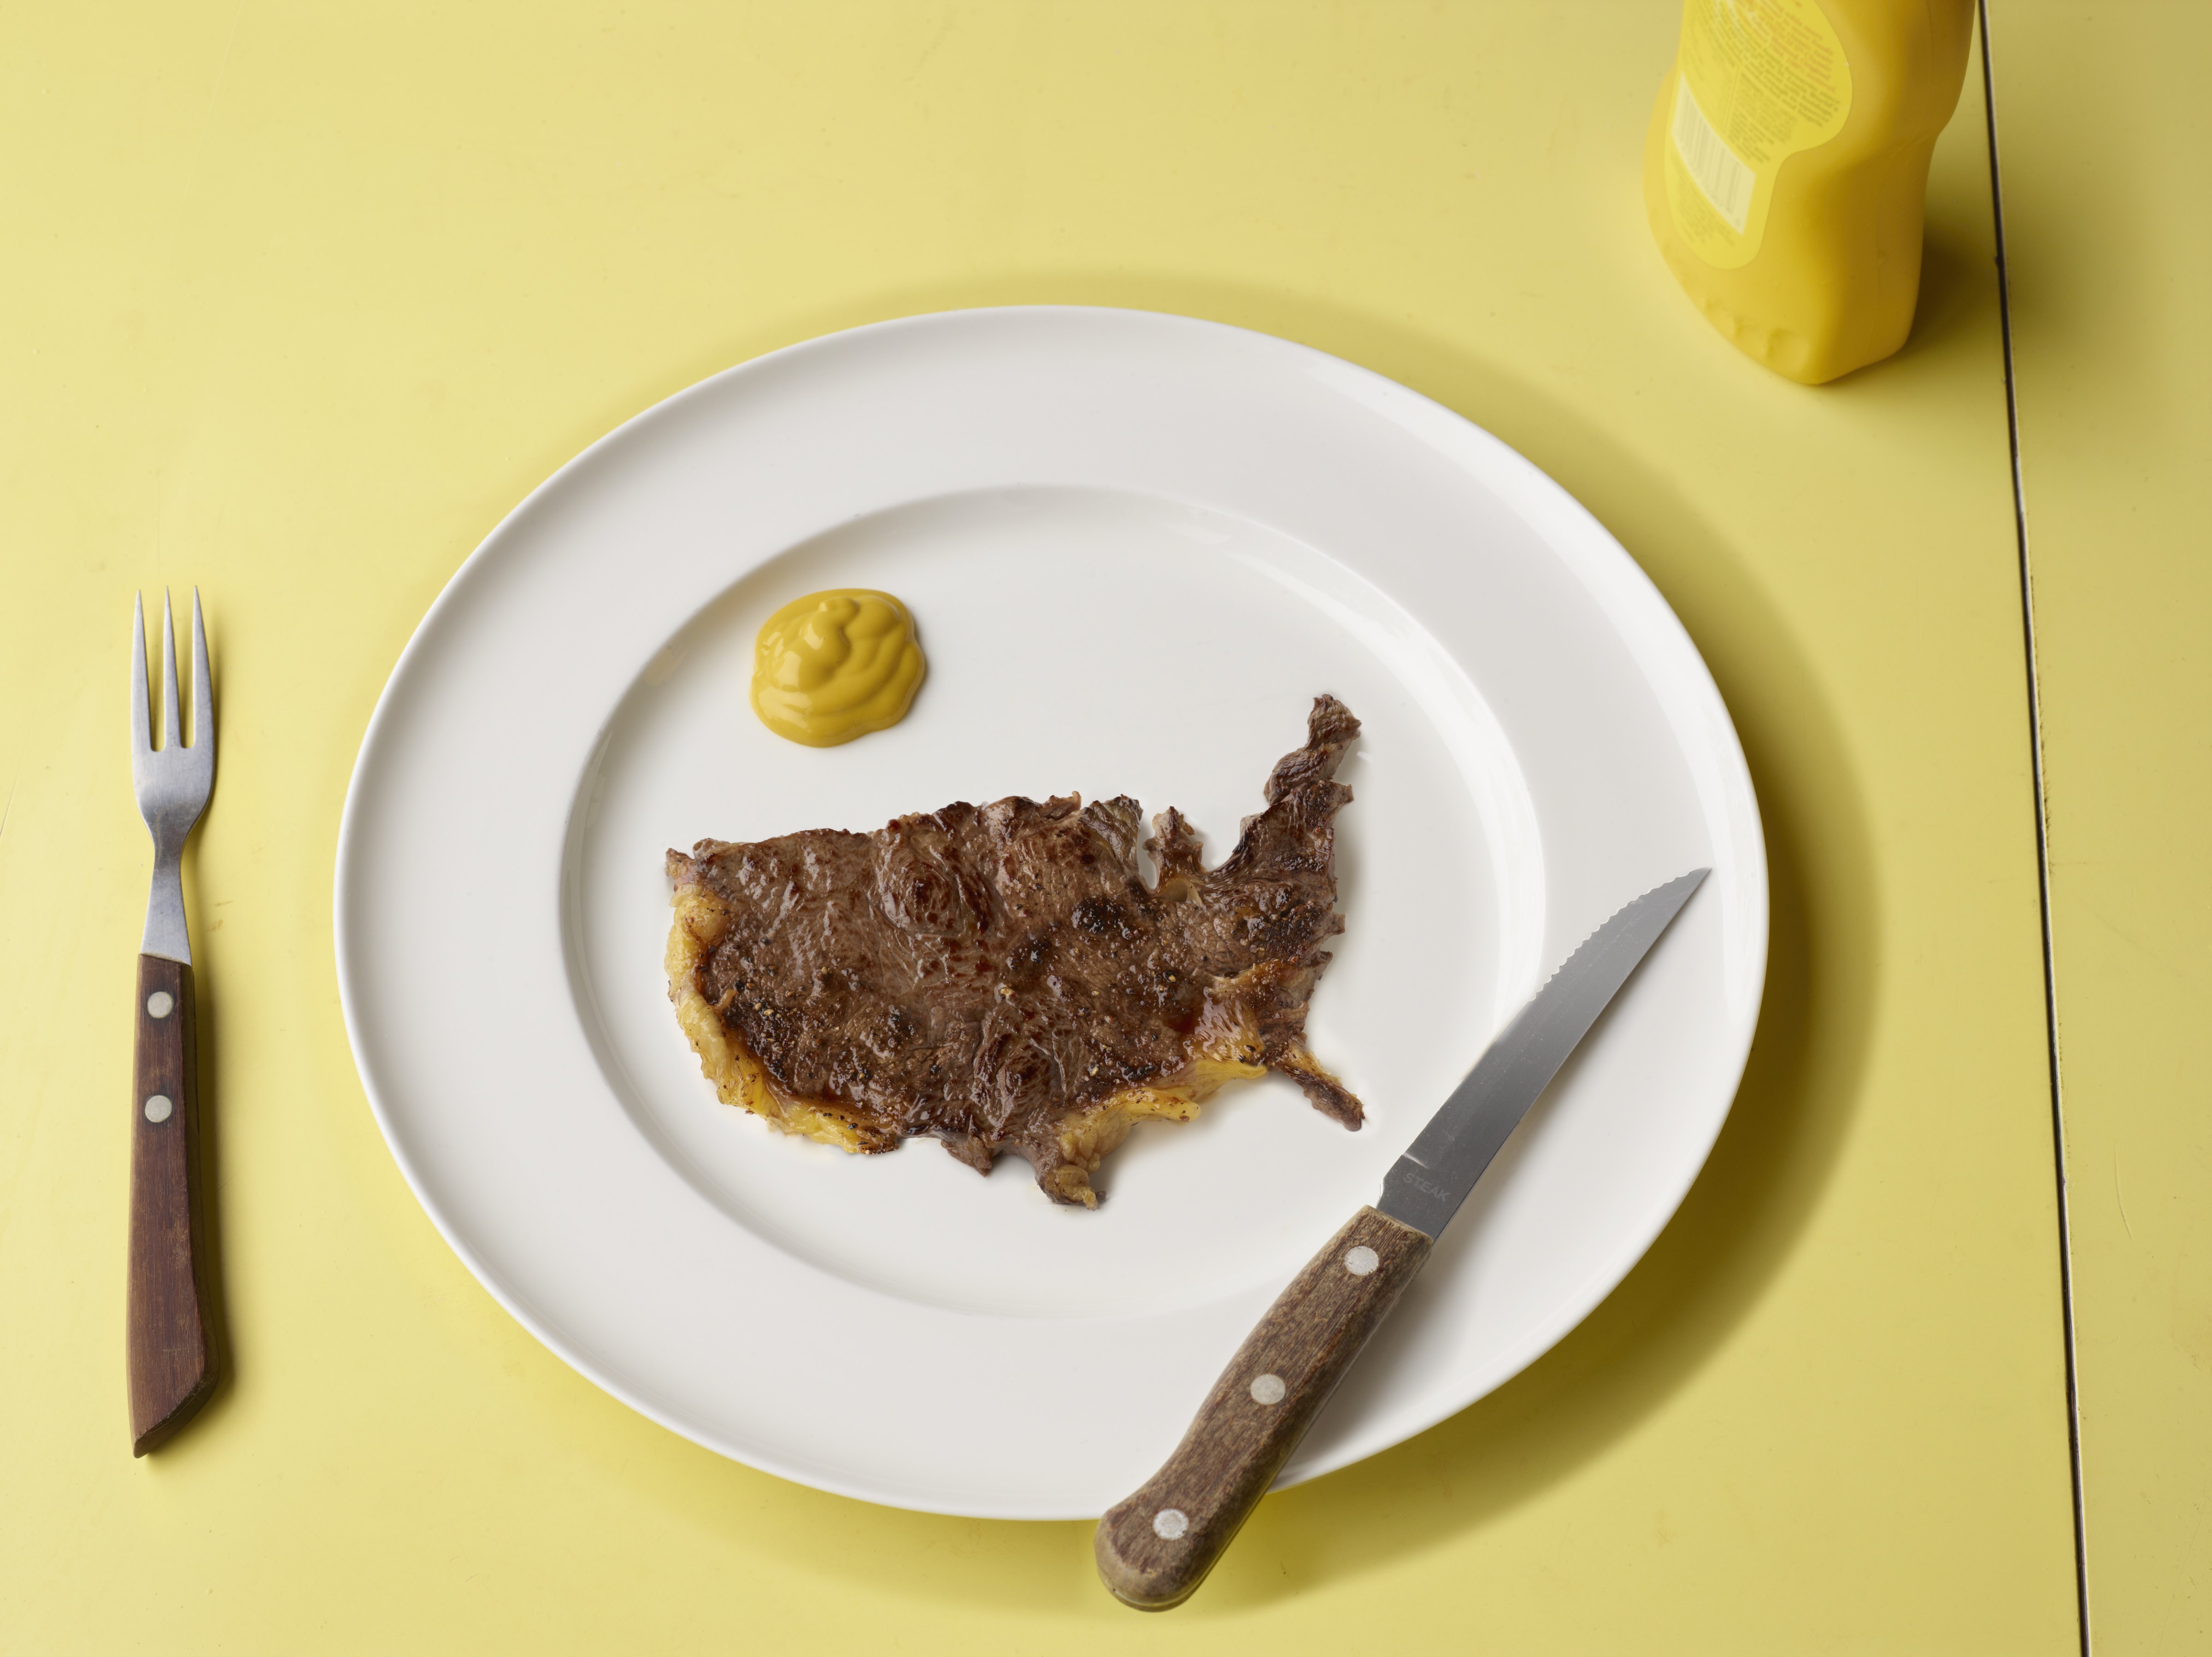 Slice of meat in shape of US